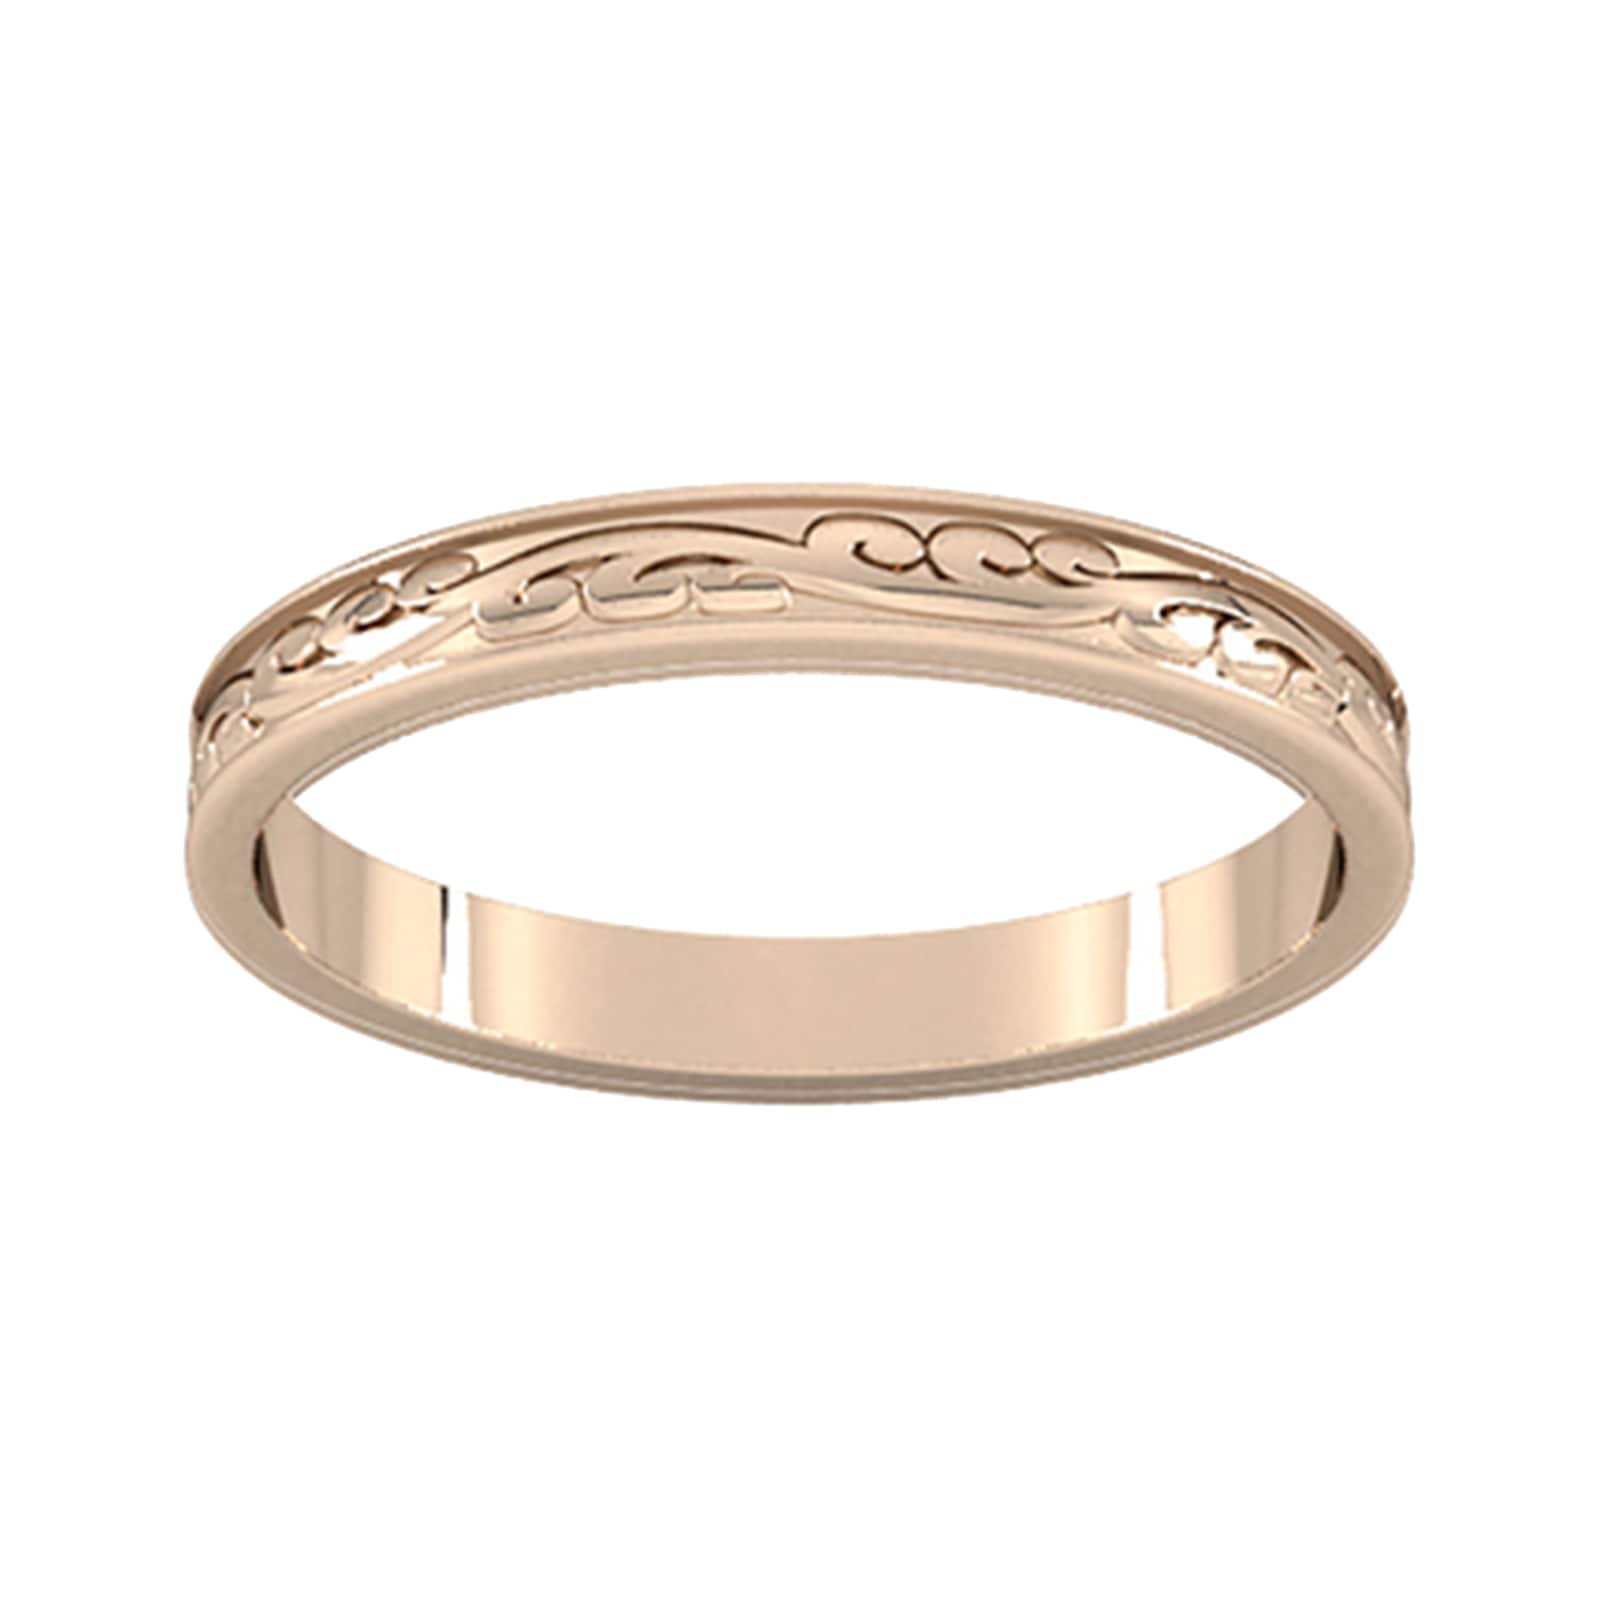 2.5mm Hand Engraved Wedding Ring In 9 Carat Rose Gold - Ring Size U